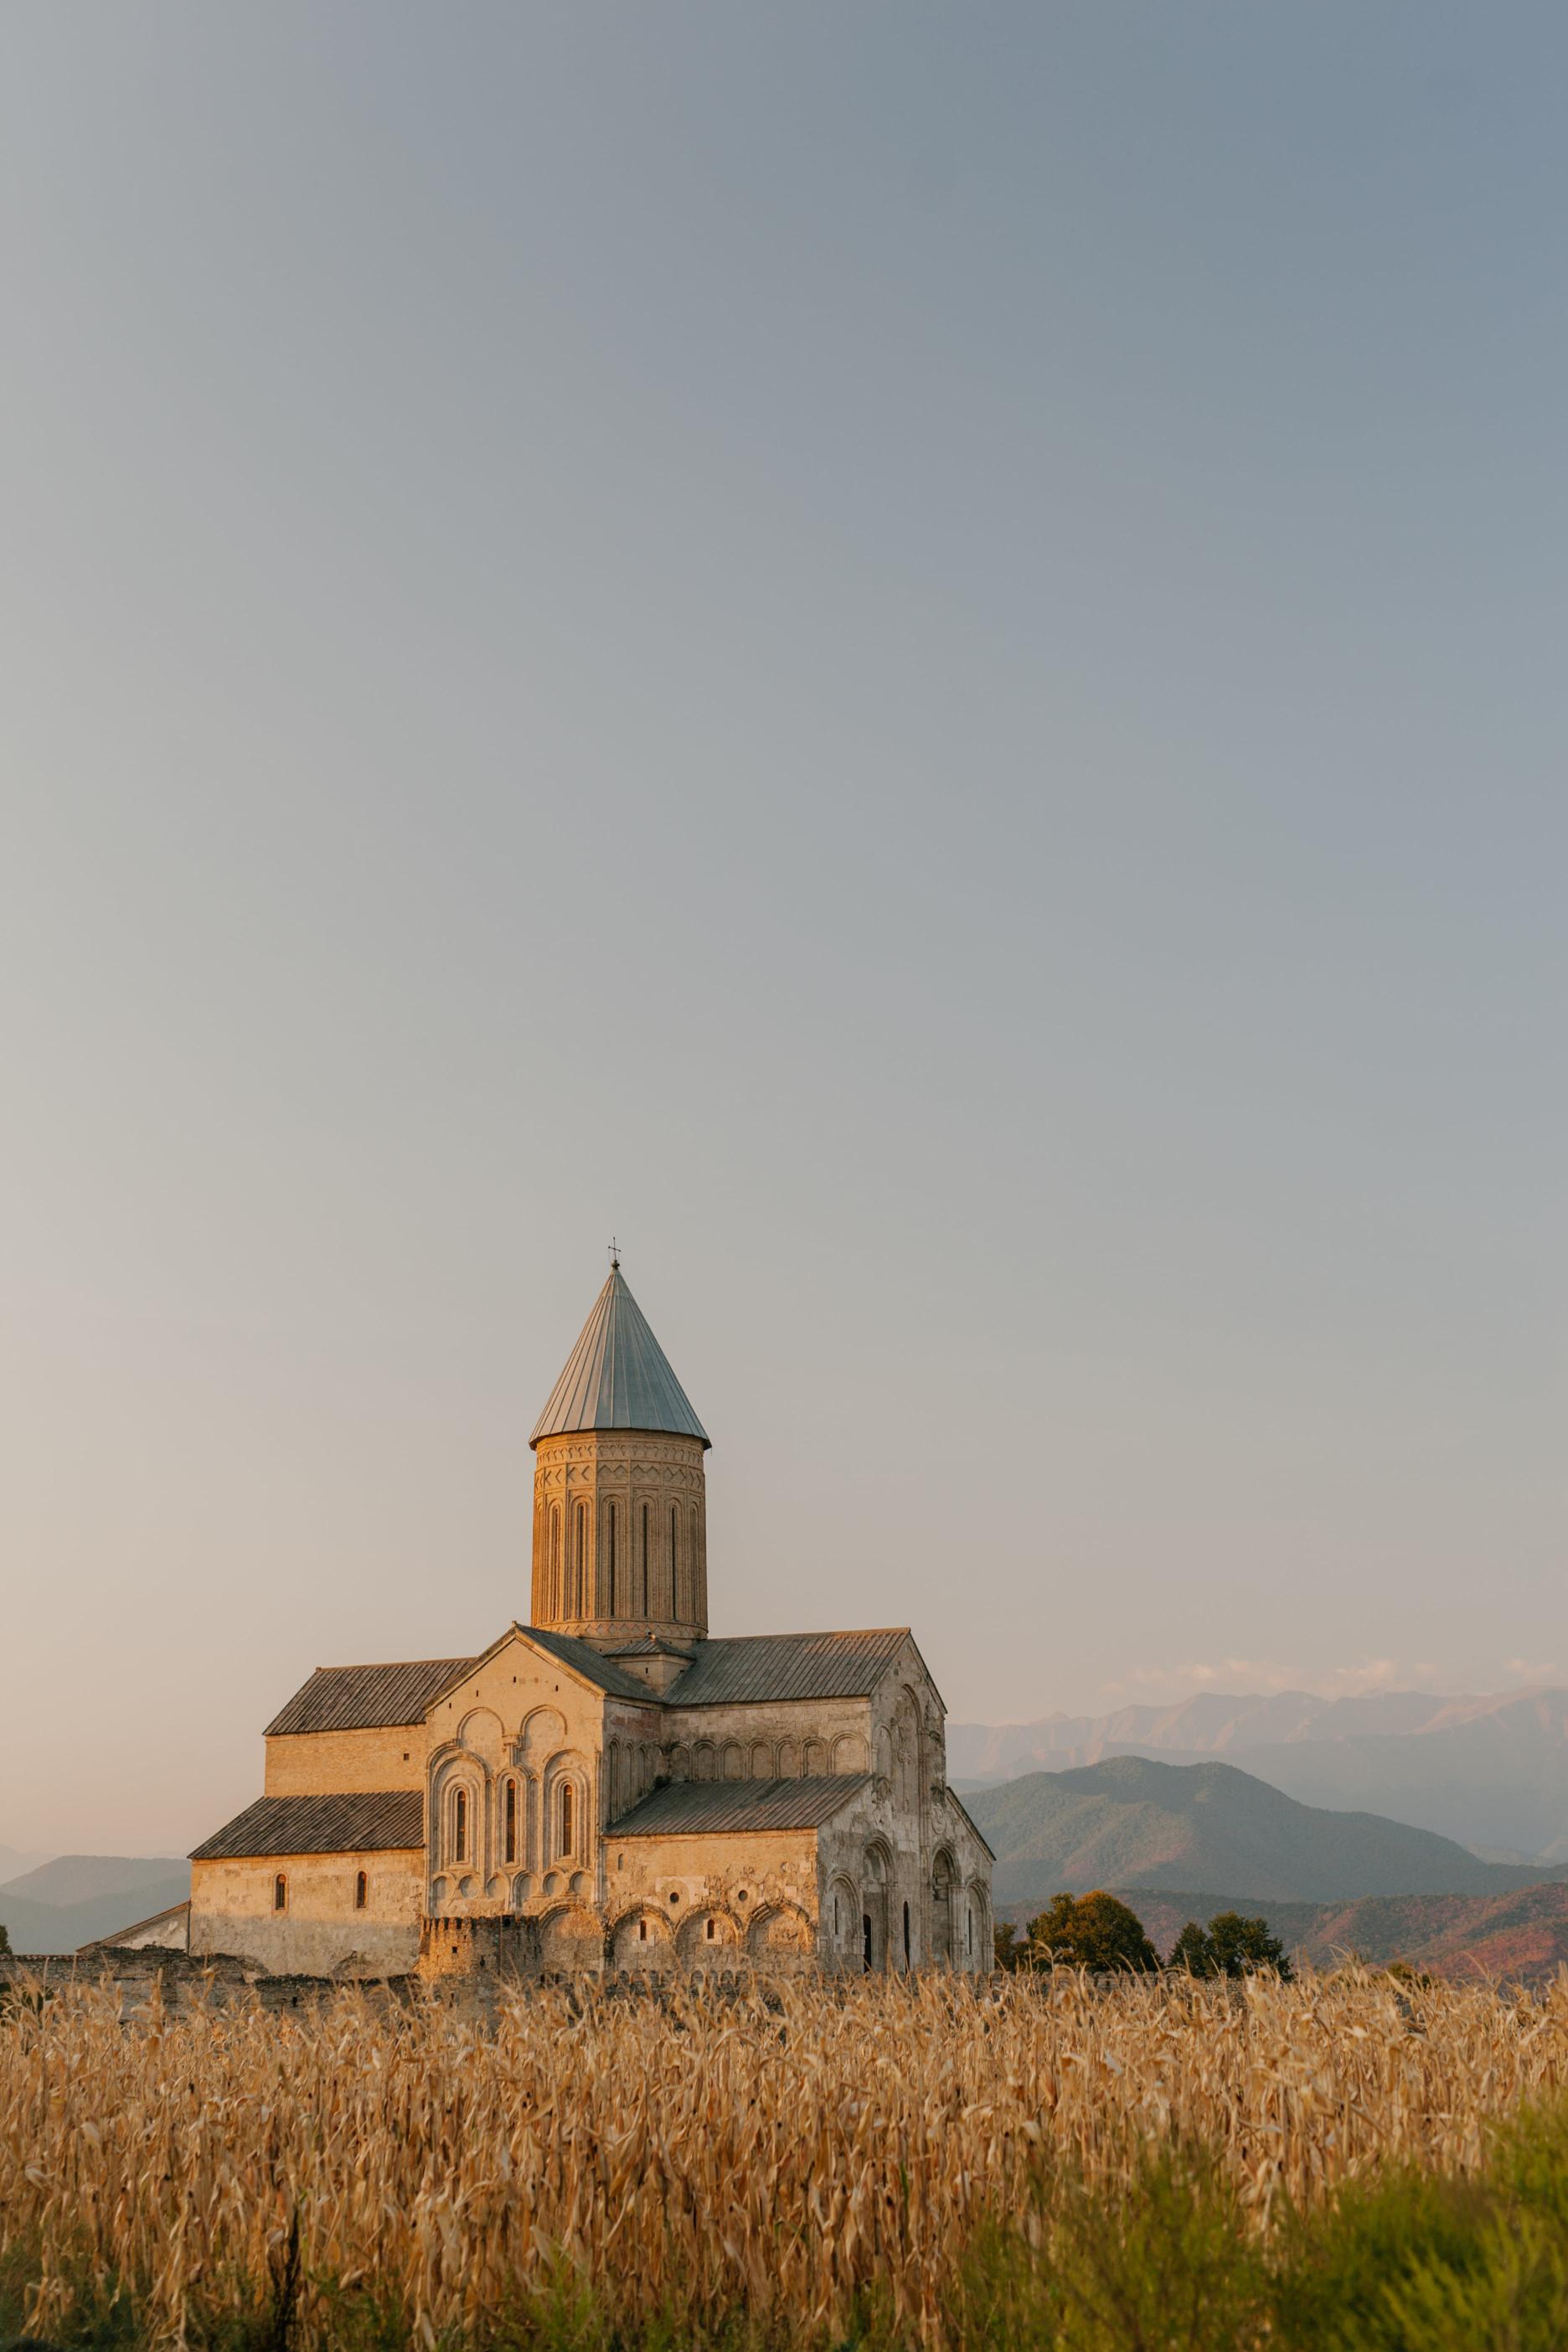 Skarby architektury sakralnej – kościoły i katedry pełne historii